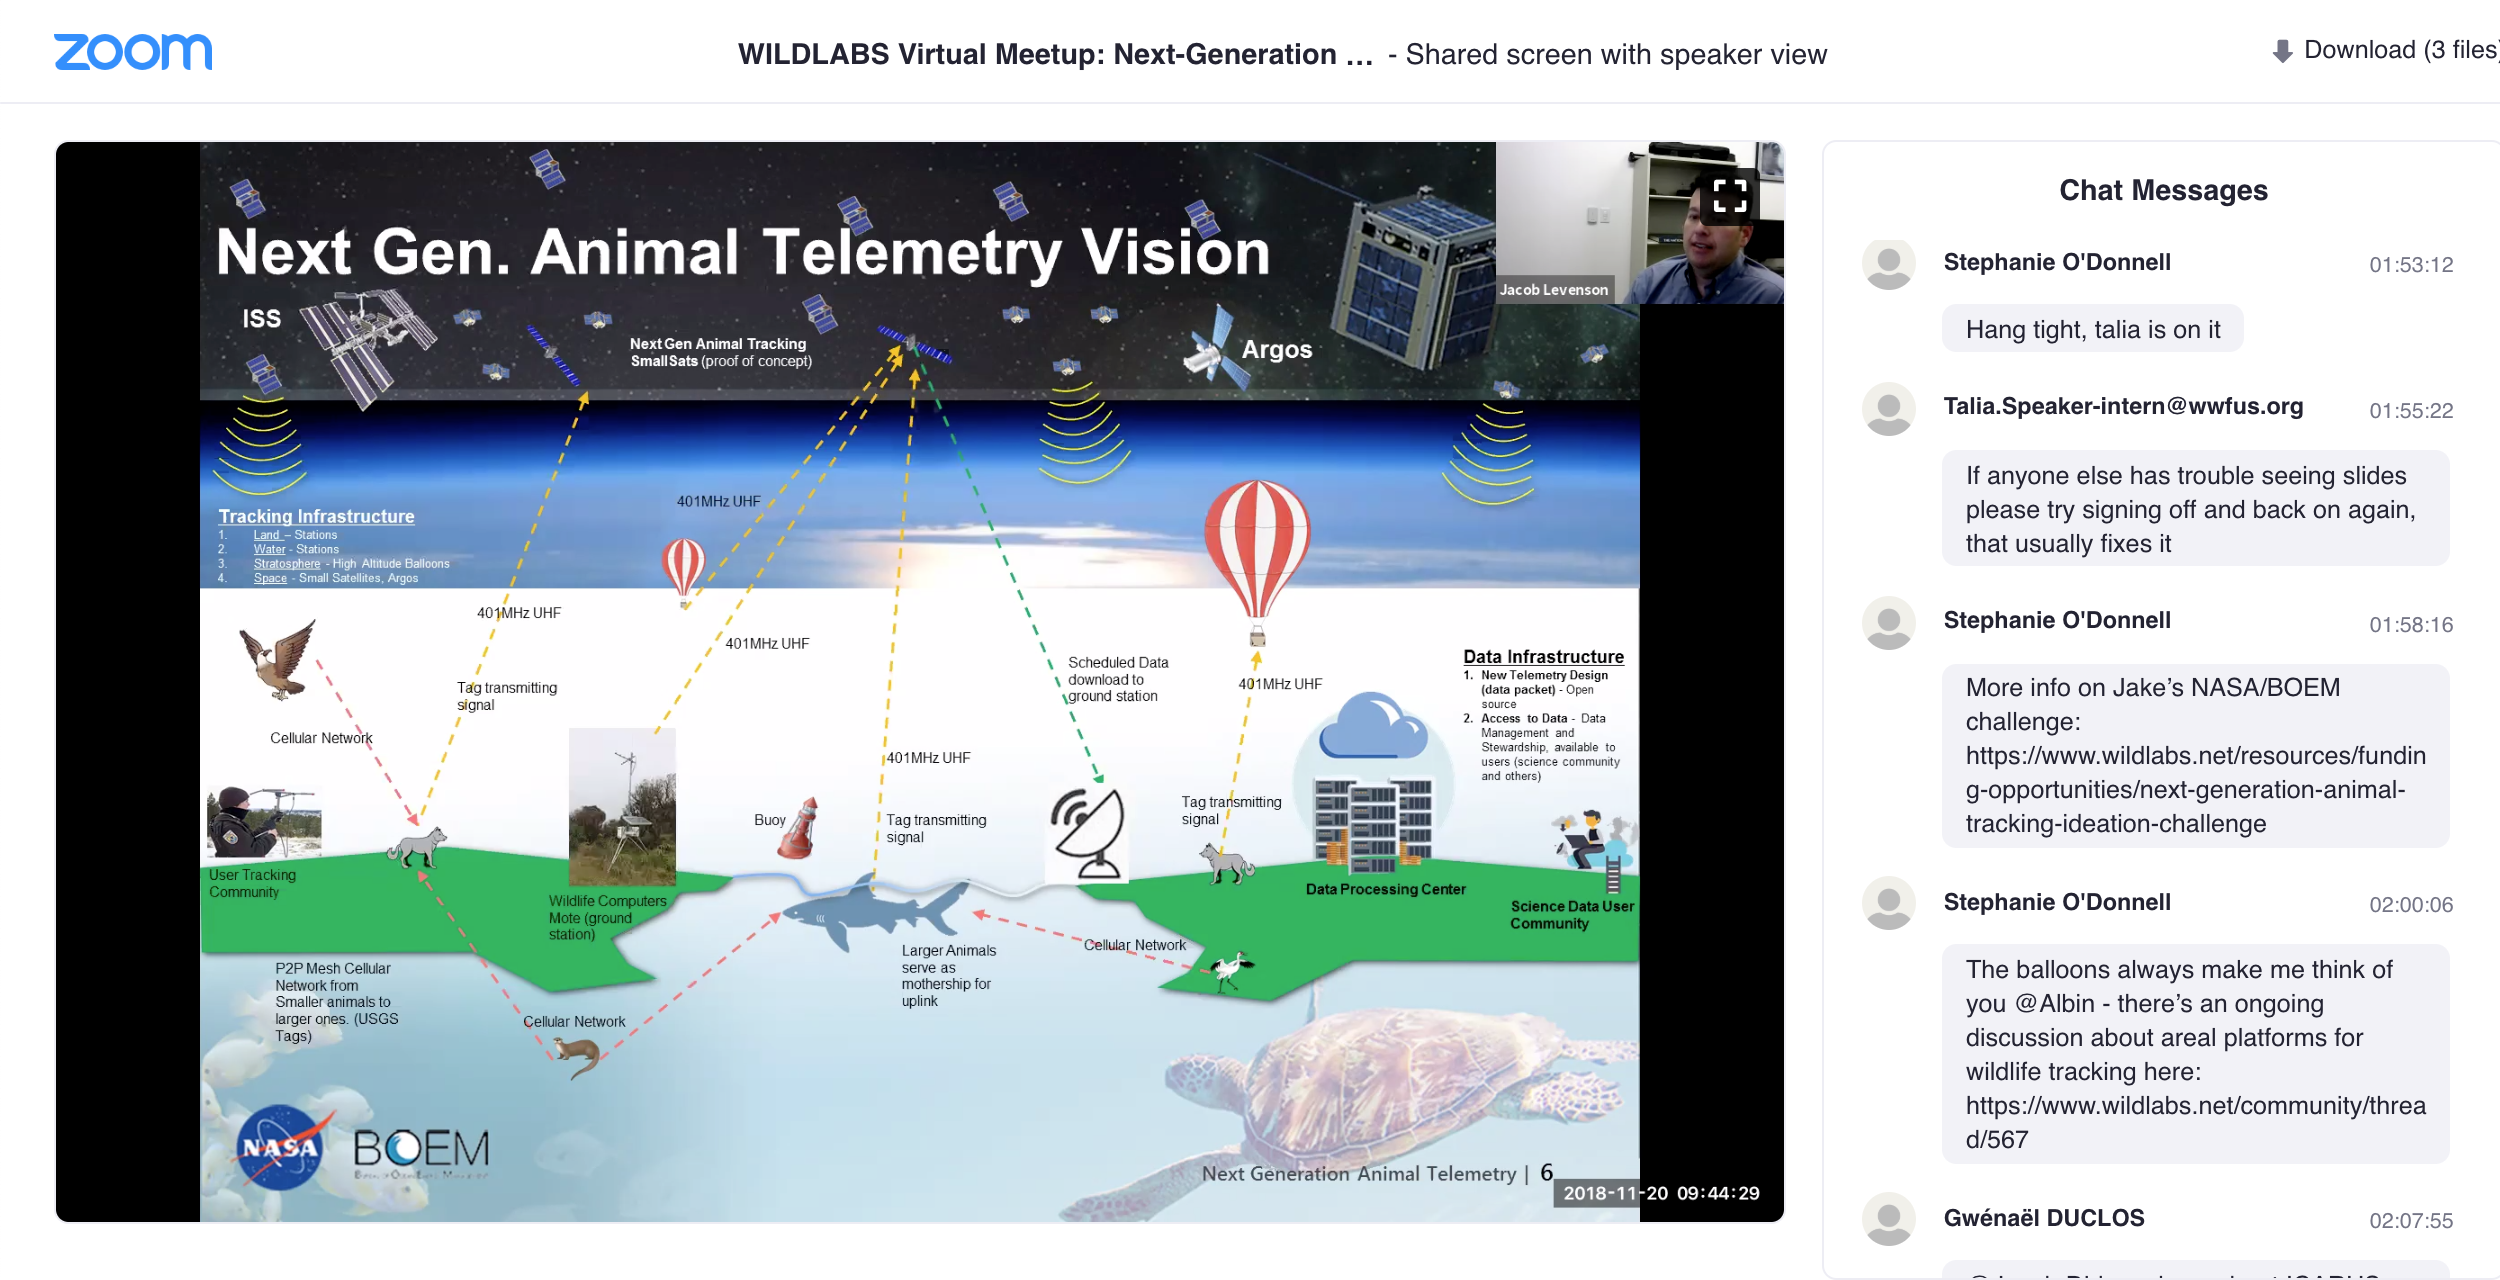 WILDLABS Virtual Meetup Link to Video Recording